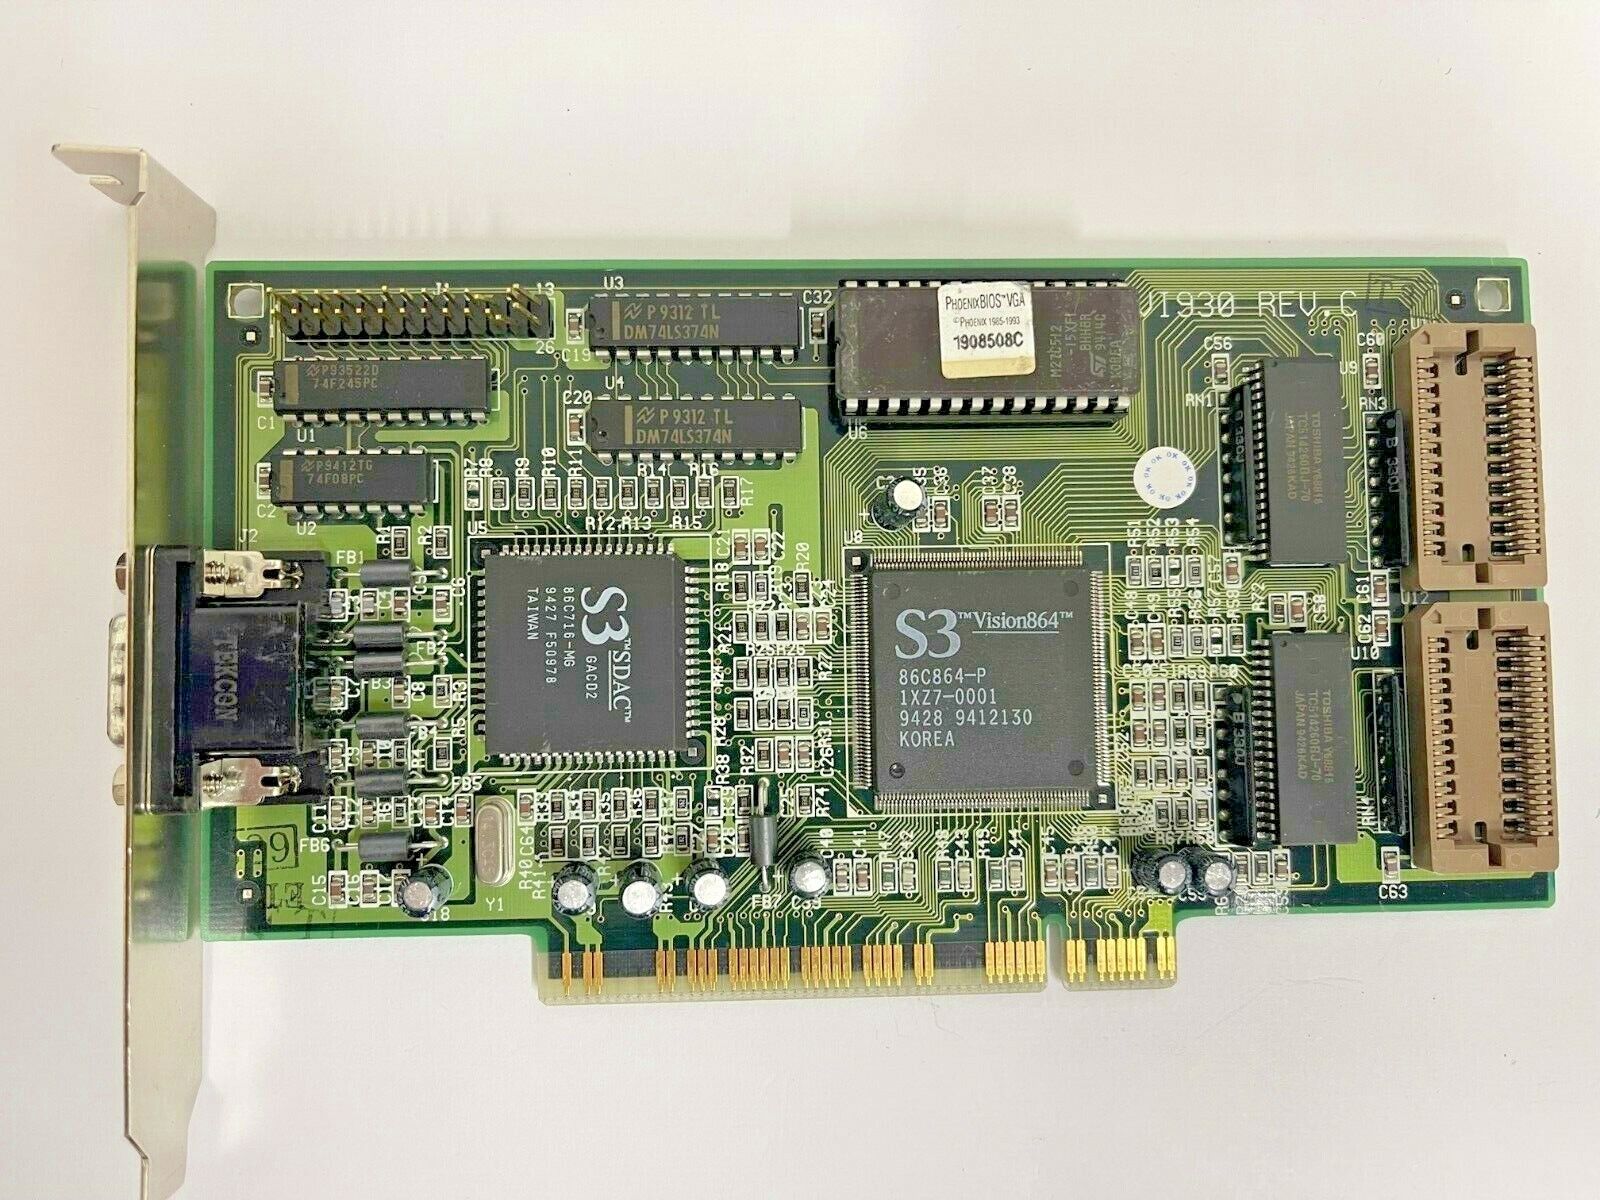 RARE VINTAGE S3 VISION864 VI930 REV C 1 MB EXP 2 MB PCI VGA CARD MXB32